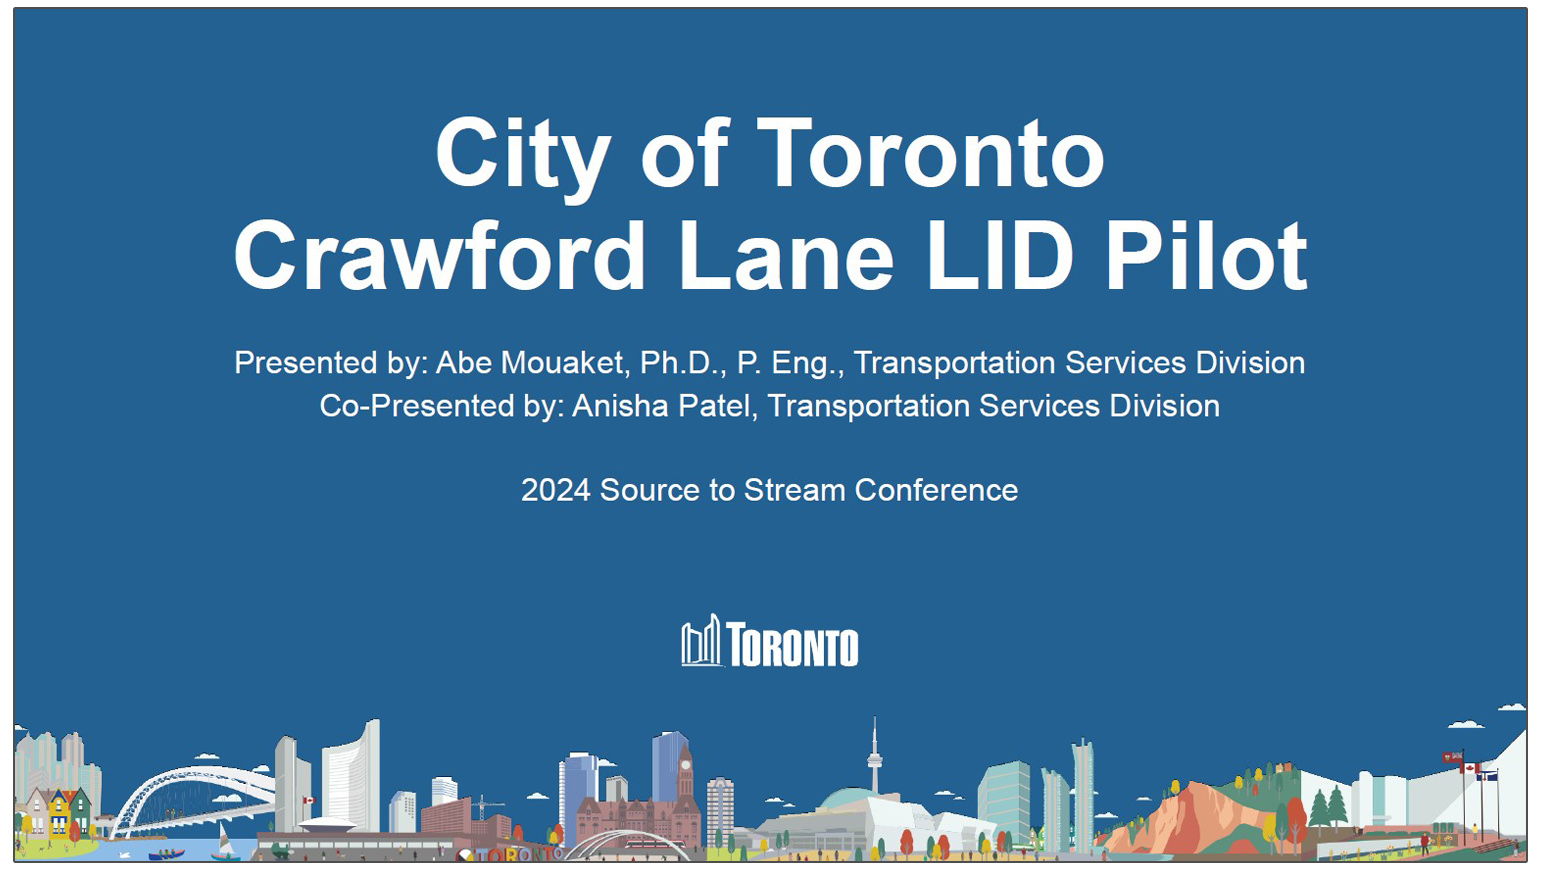 City of Toronto Crawford Lane LID Pilot - presentation by Abe Mouaket and Anisha Patel